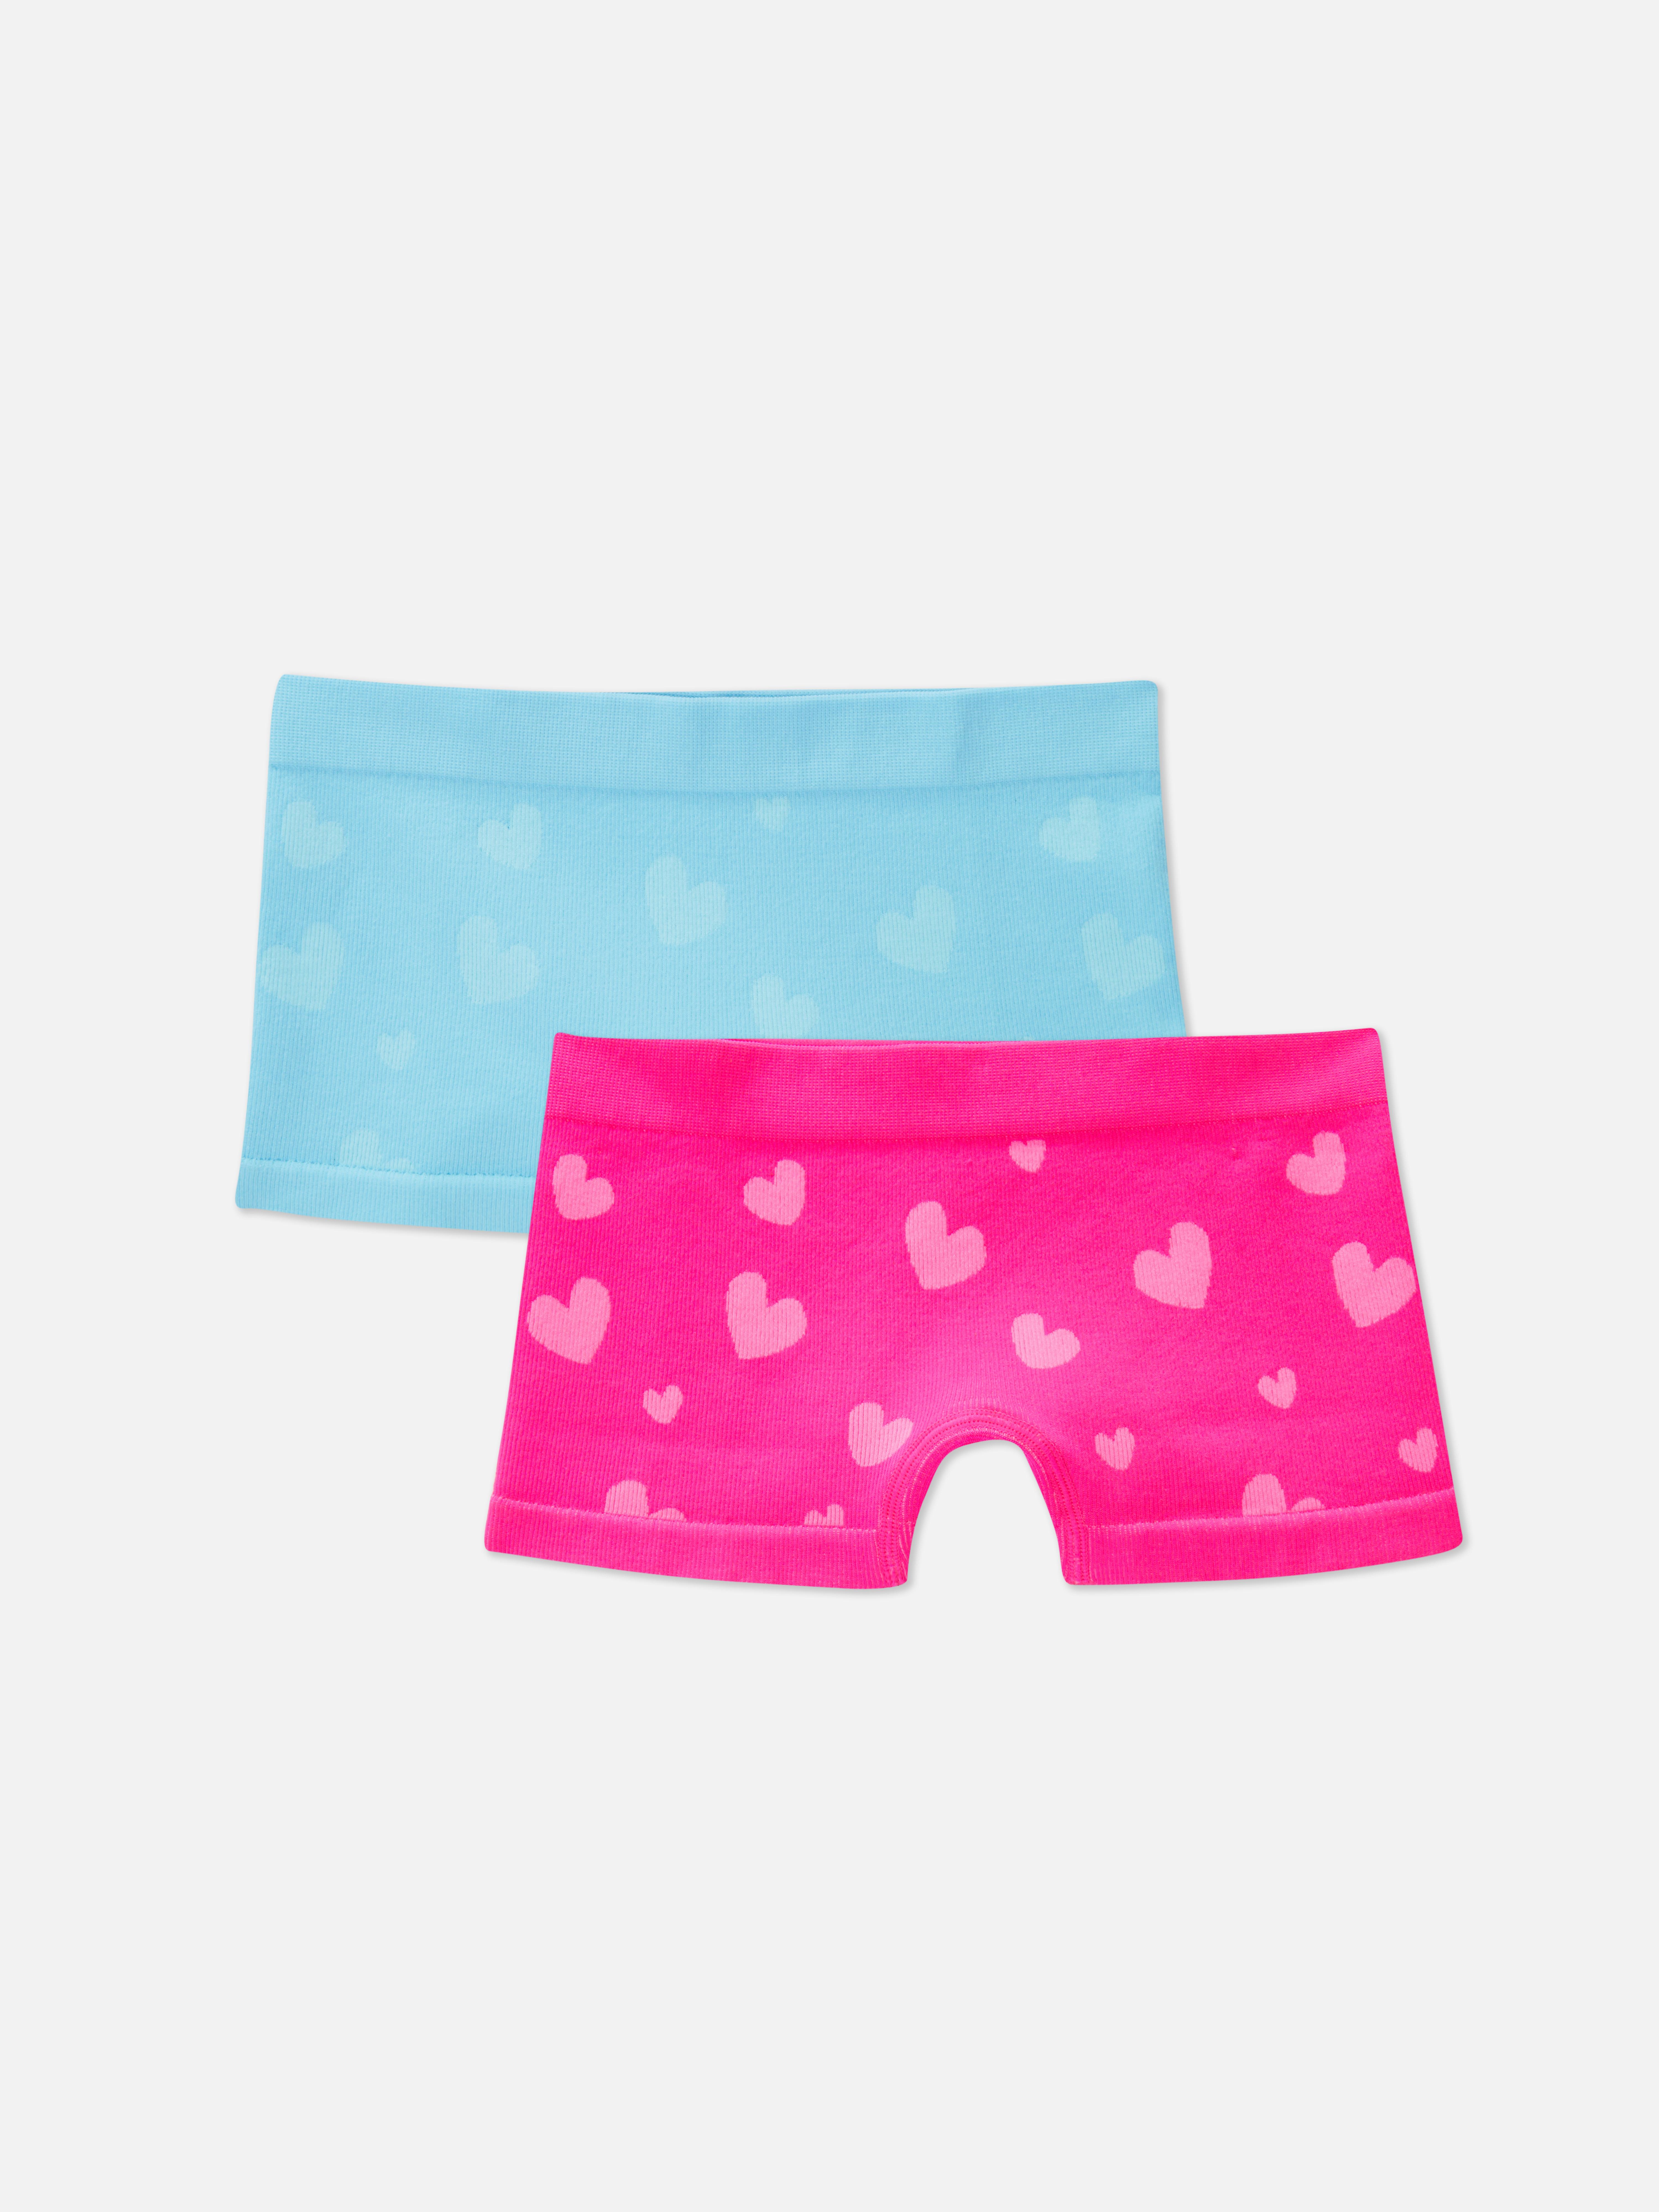 Men Disney Lilo And Stitch Boxer Shorts Panties Soft Underwear